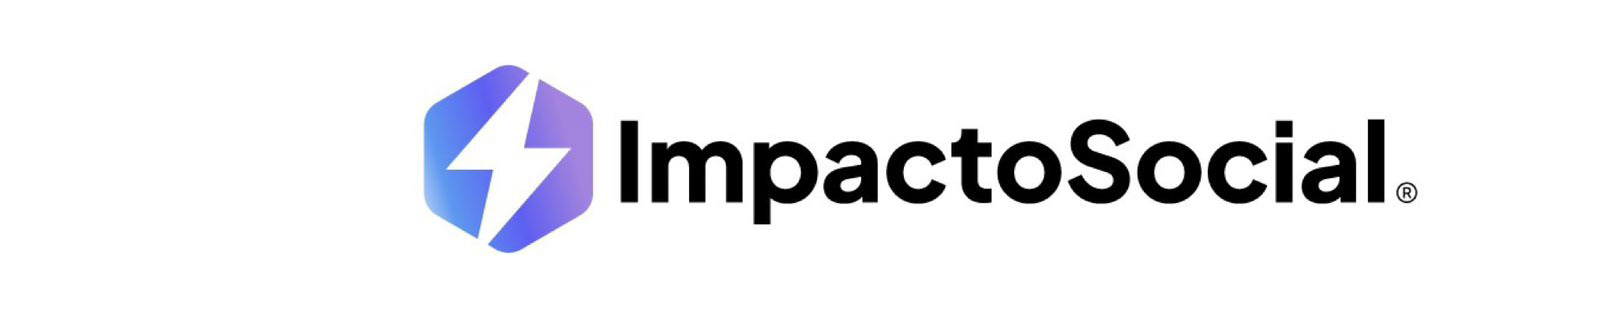 Impacto Social's profile banner